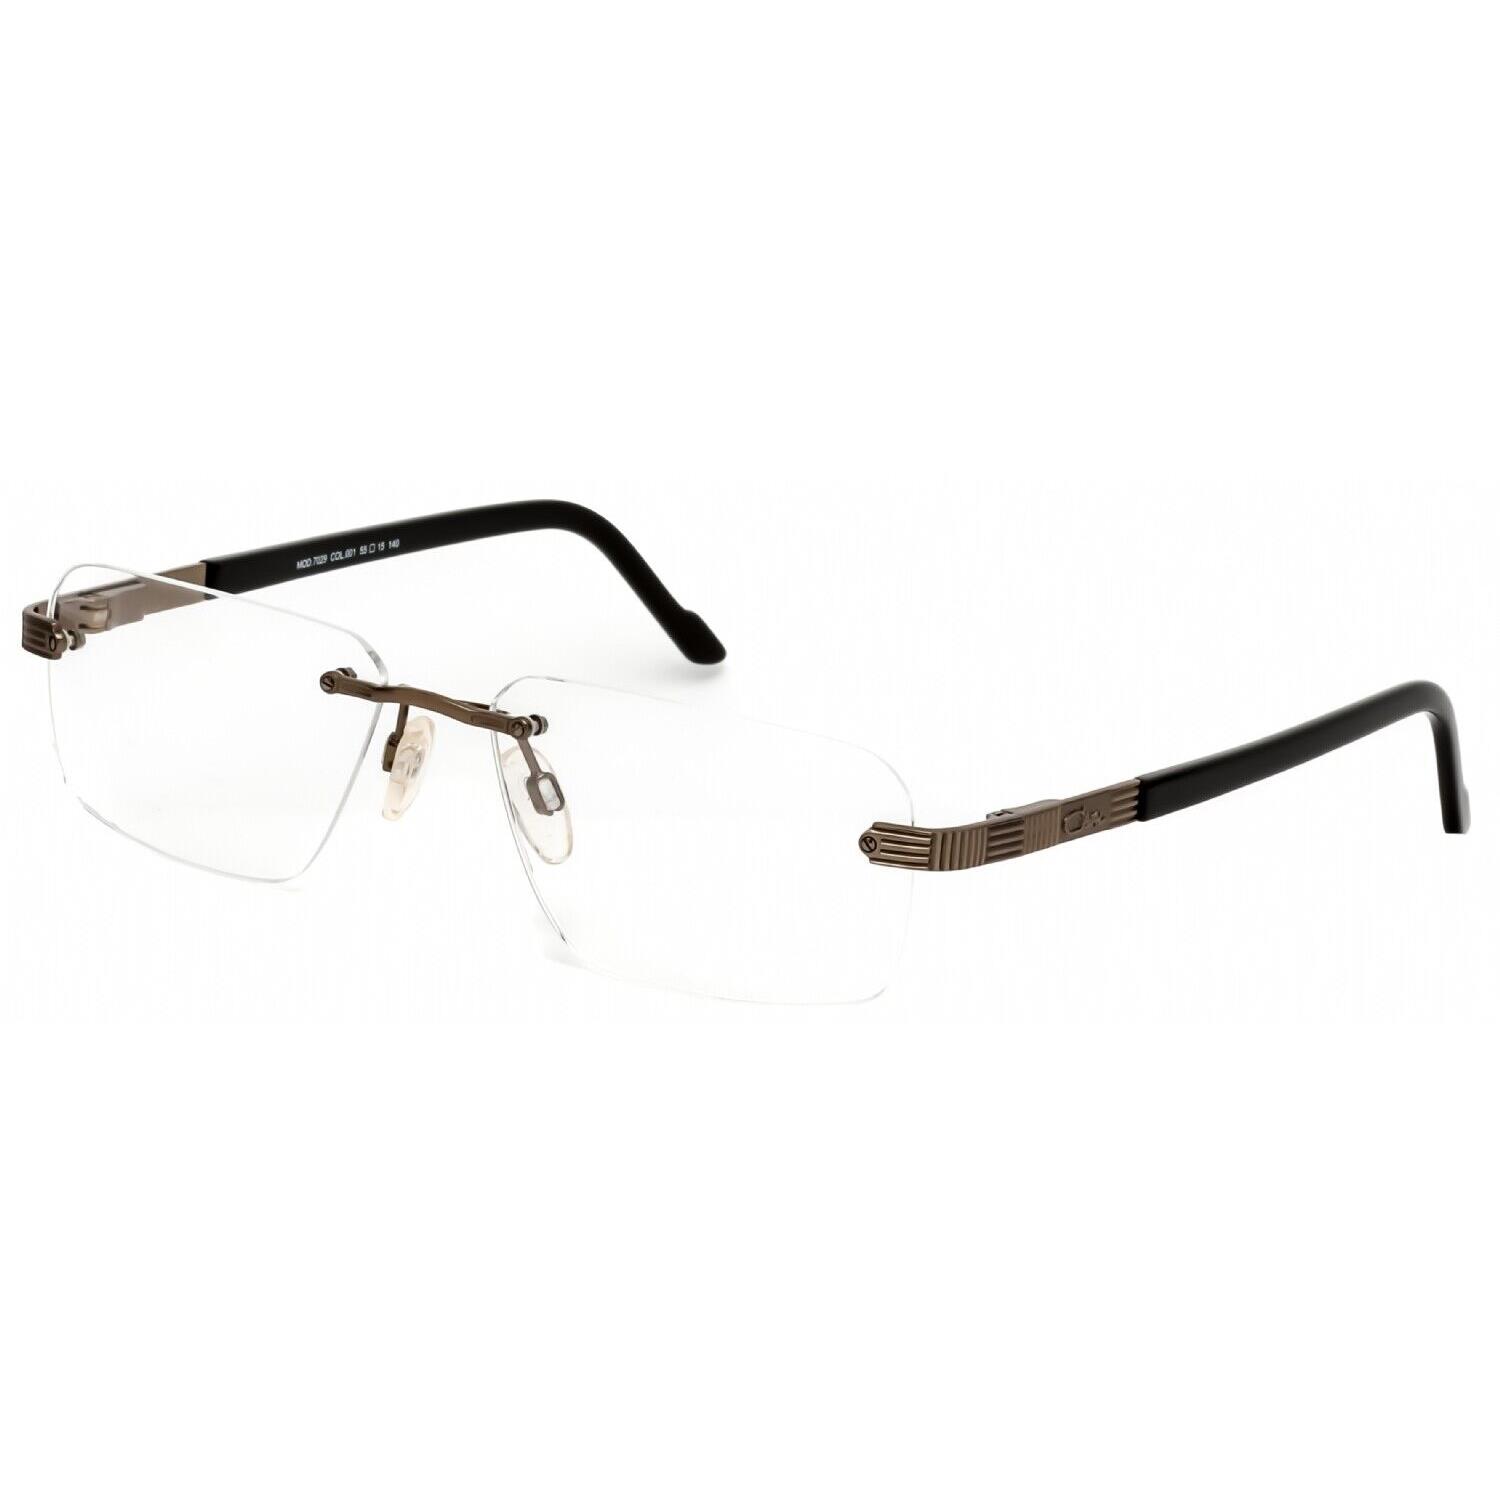 NY22 Cazal 7029 Mettalic Grey/black Unisex Rimless Metal Eyeglasses 55mm